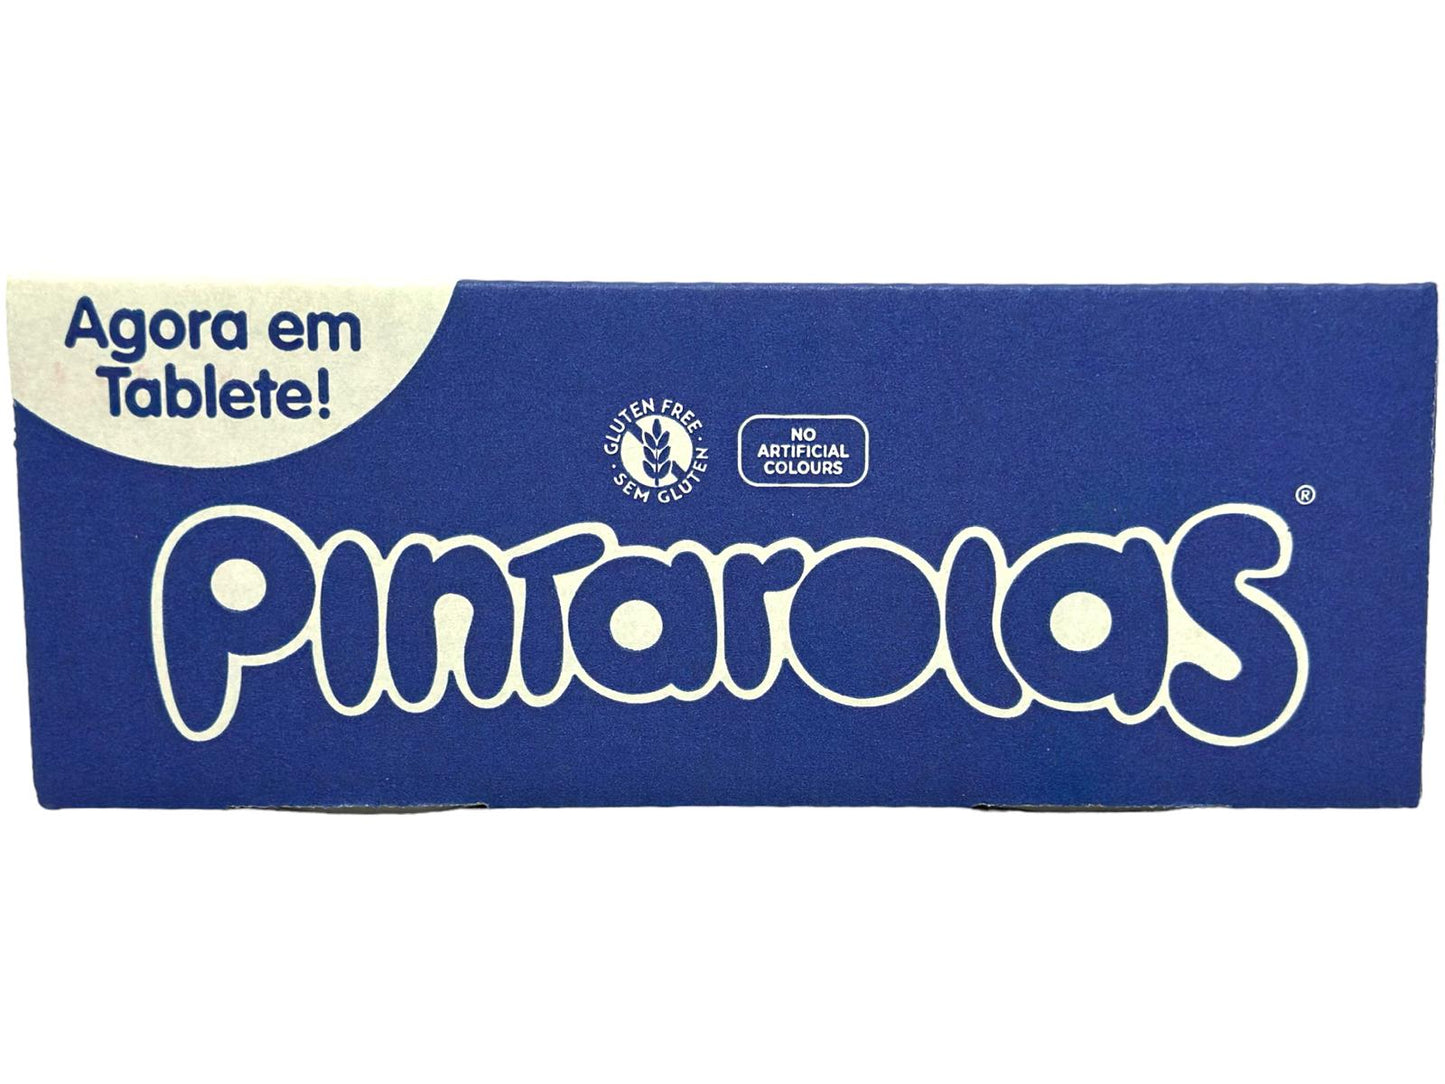 Pintarolas Milk Chocolate Bar with Chocolate Coated Beans 22 x 100g 2200g total